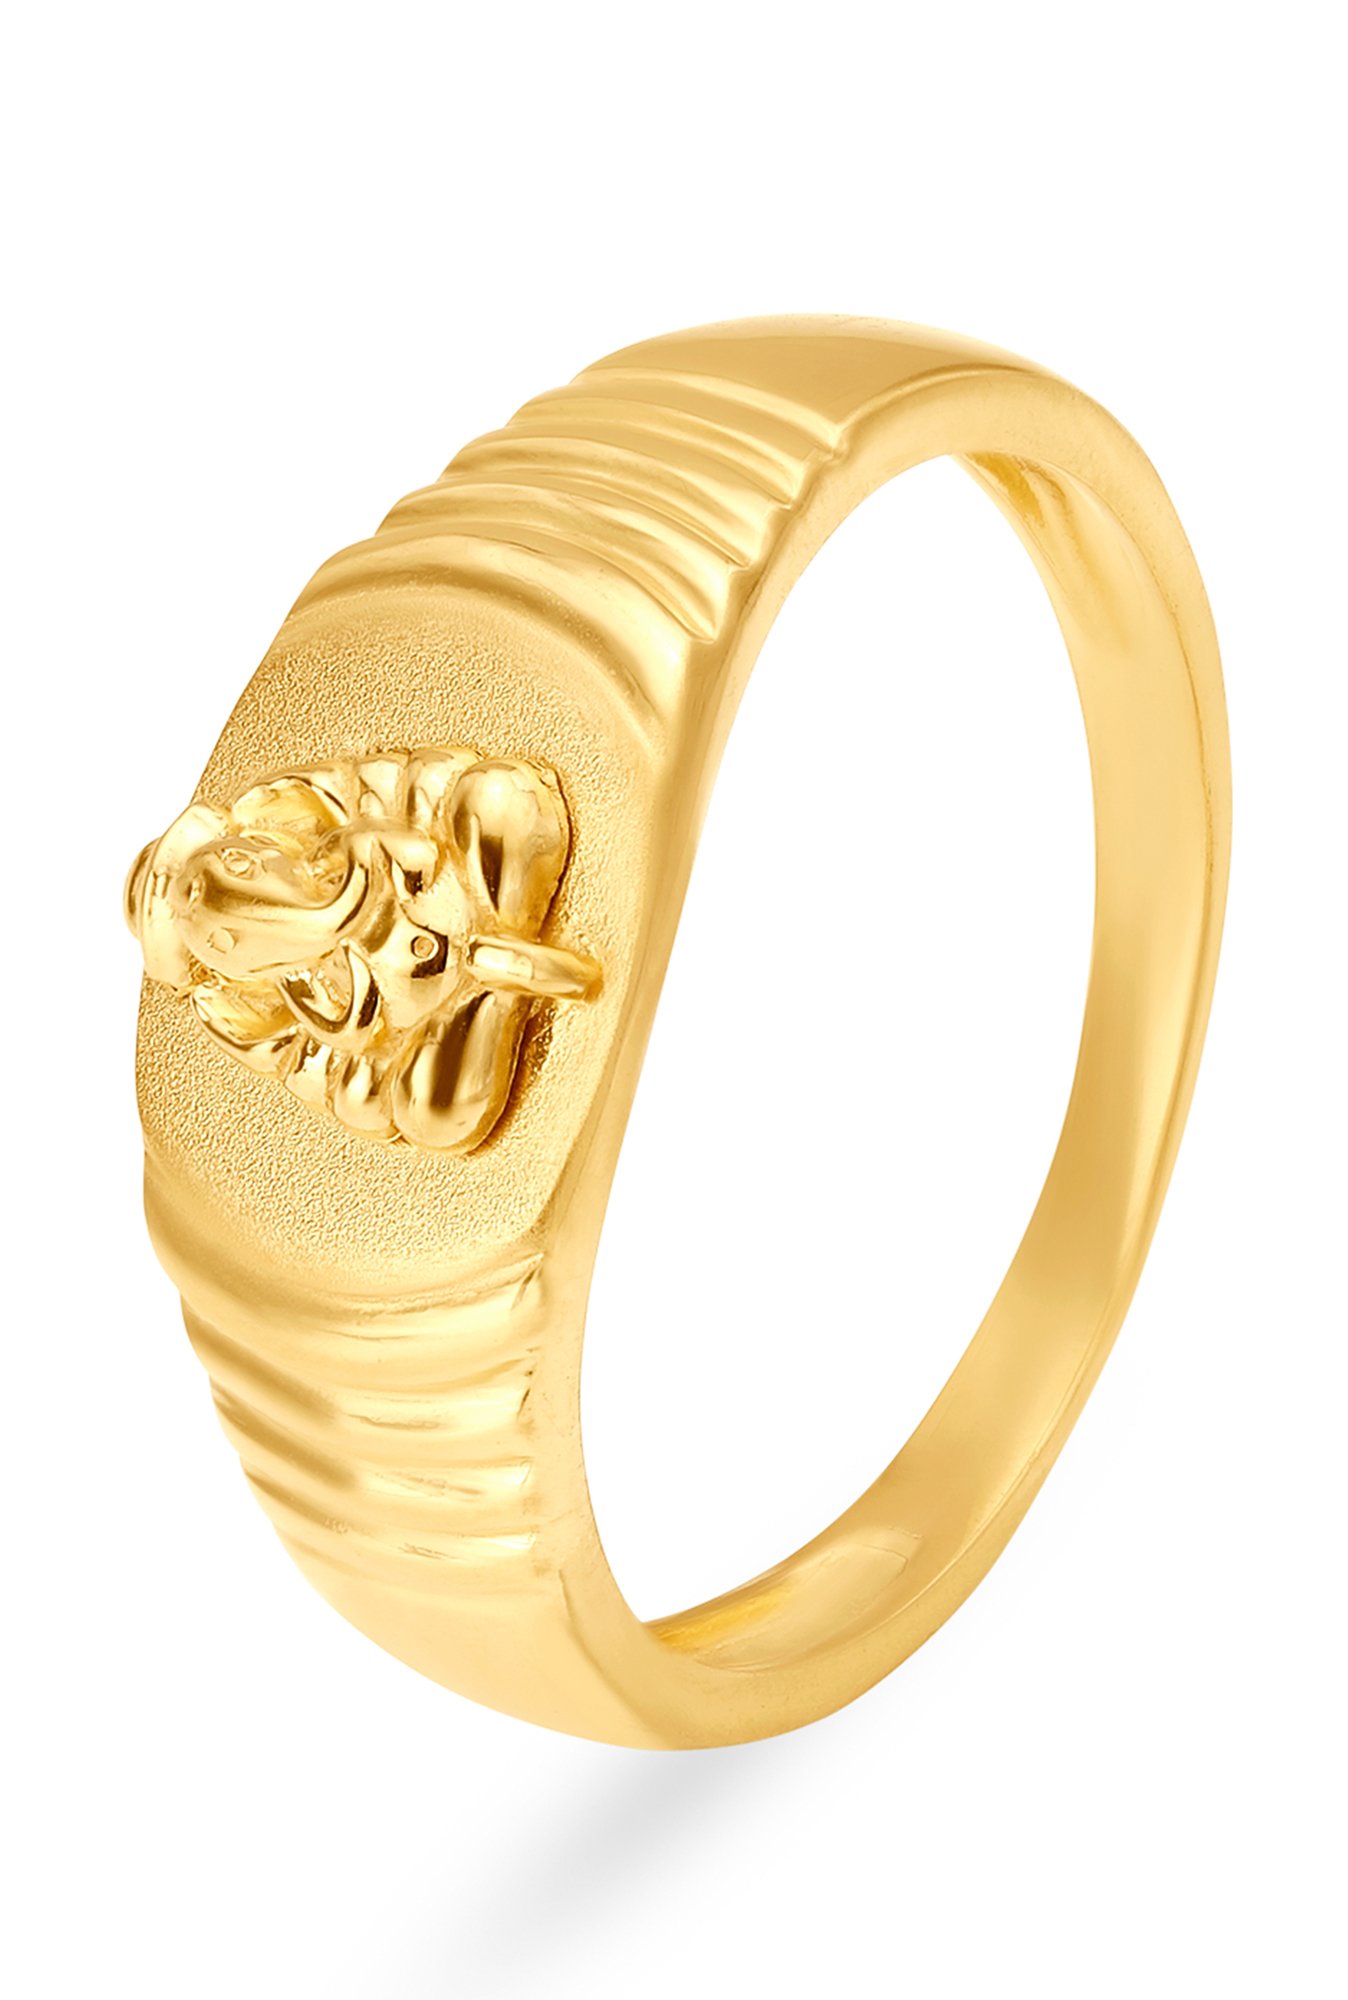 Majestic divine sai baba gold ring - jewelnidhi.com